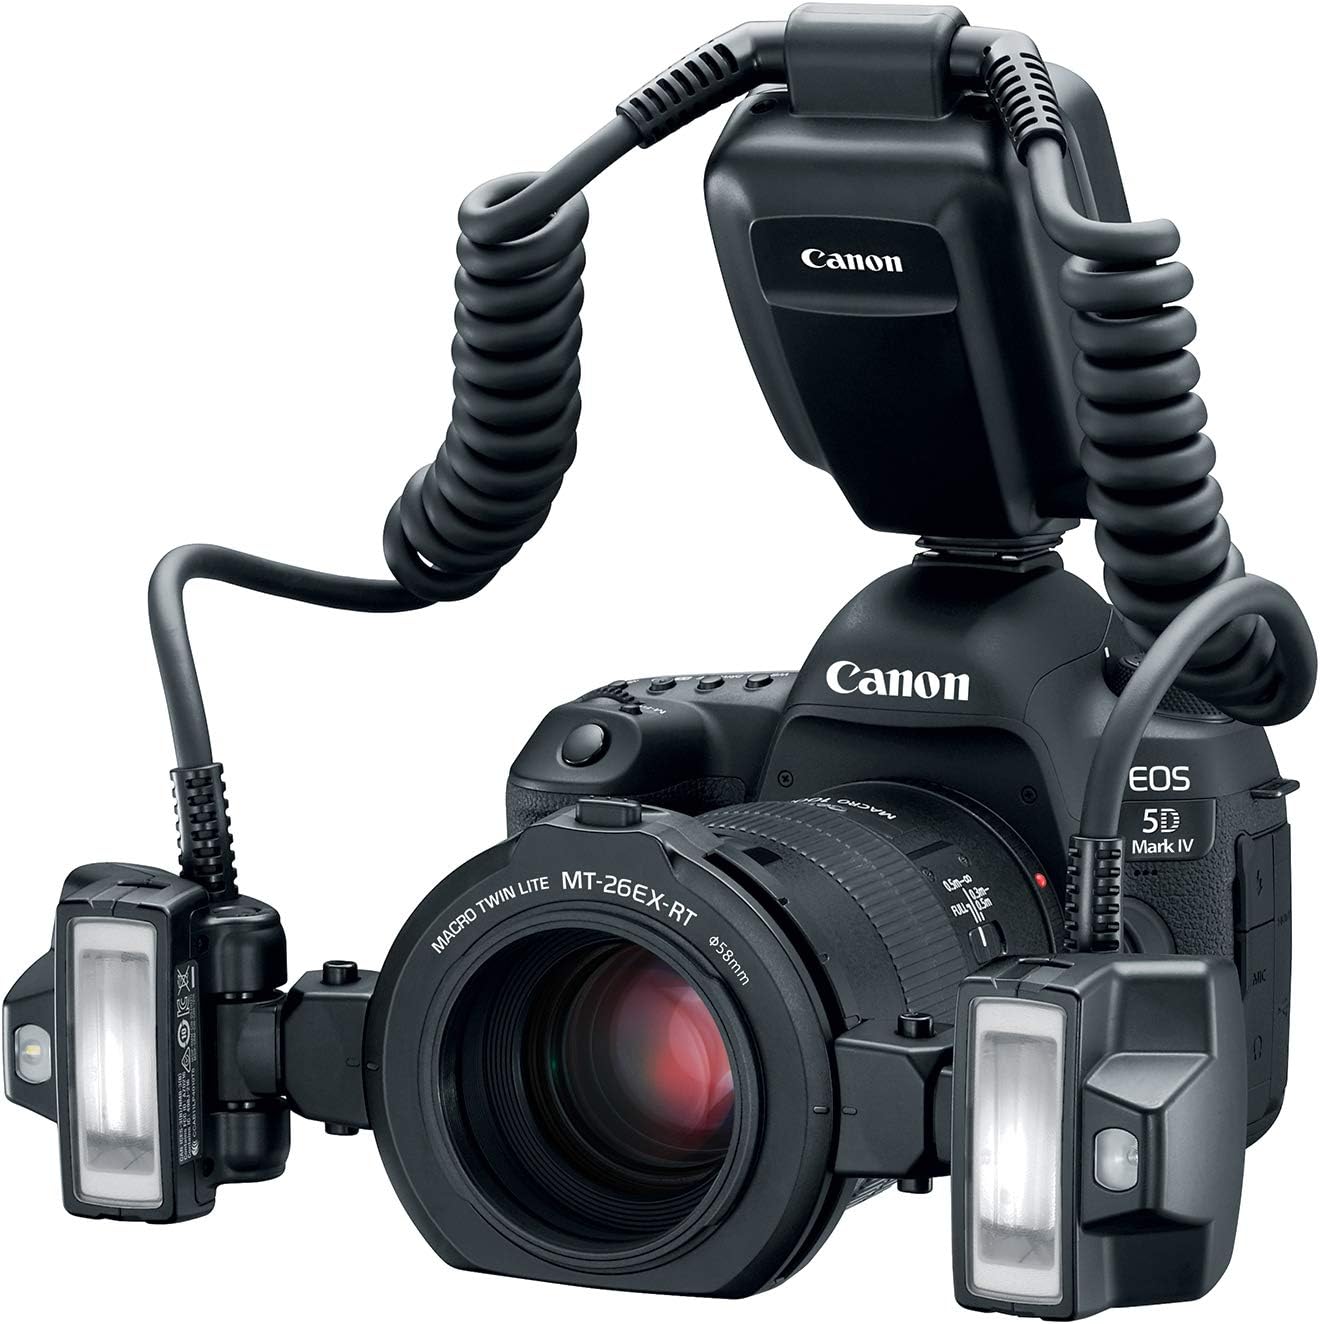 Canon MT-26EX-RT Macro Twin Lite (2398C002) Bundle with 32GB SDHC Memory Card